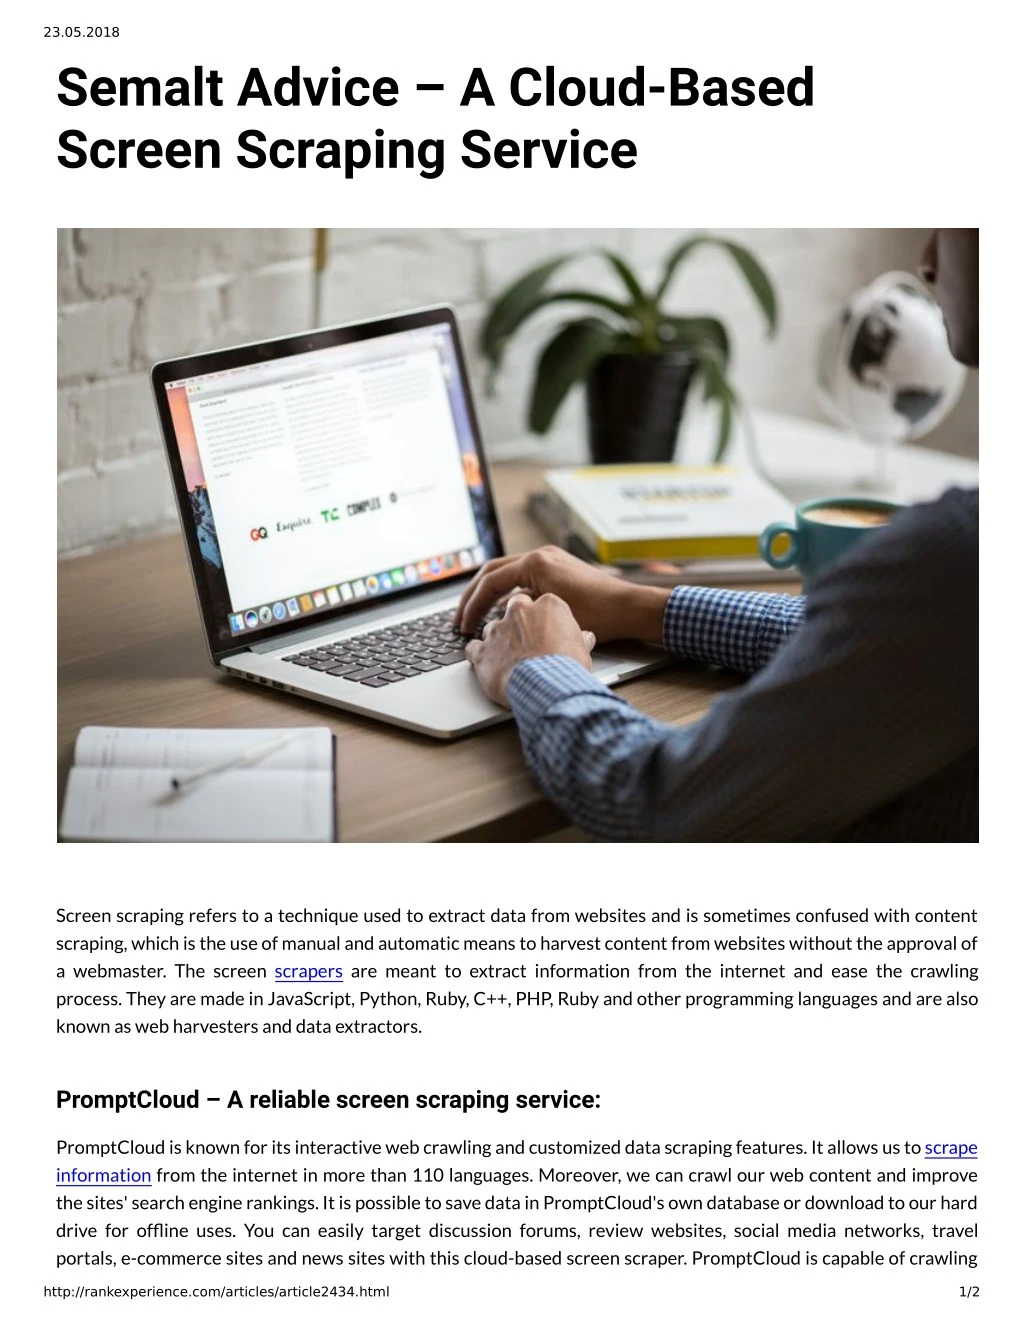 23 05 2018 semalt advice a cloud based screen